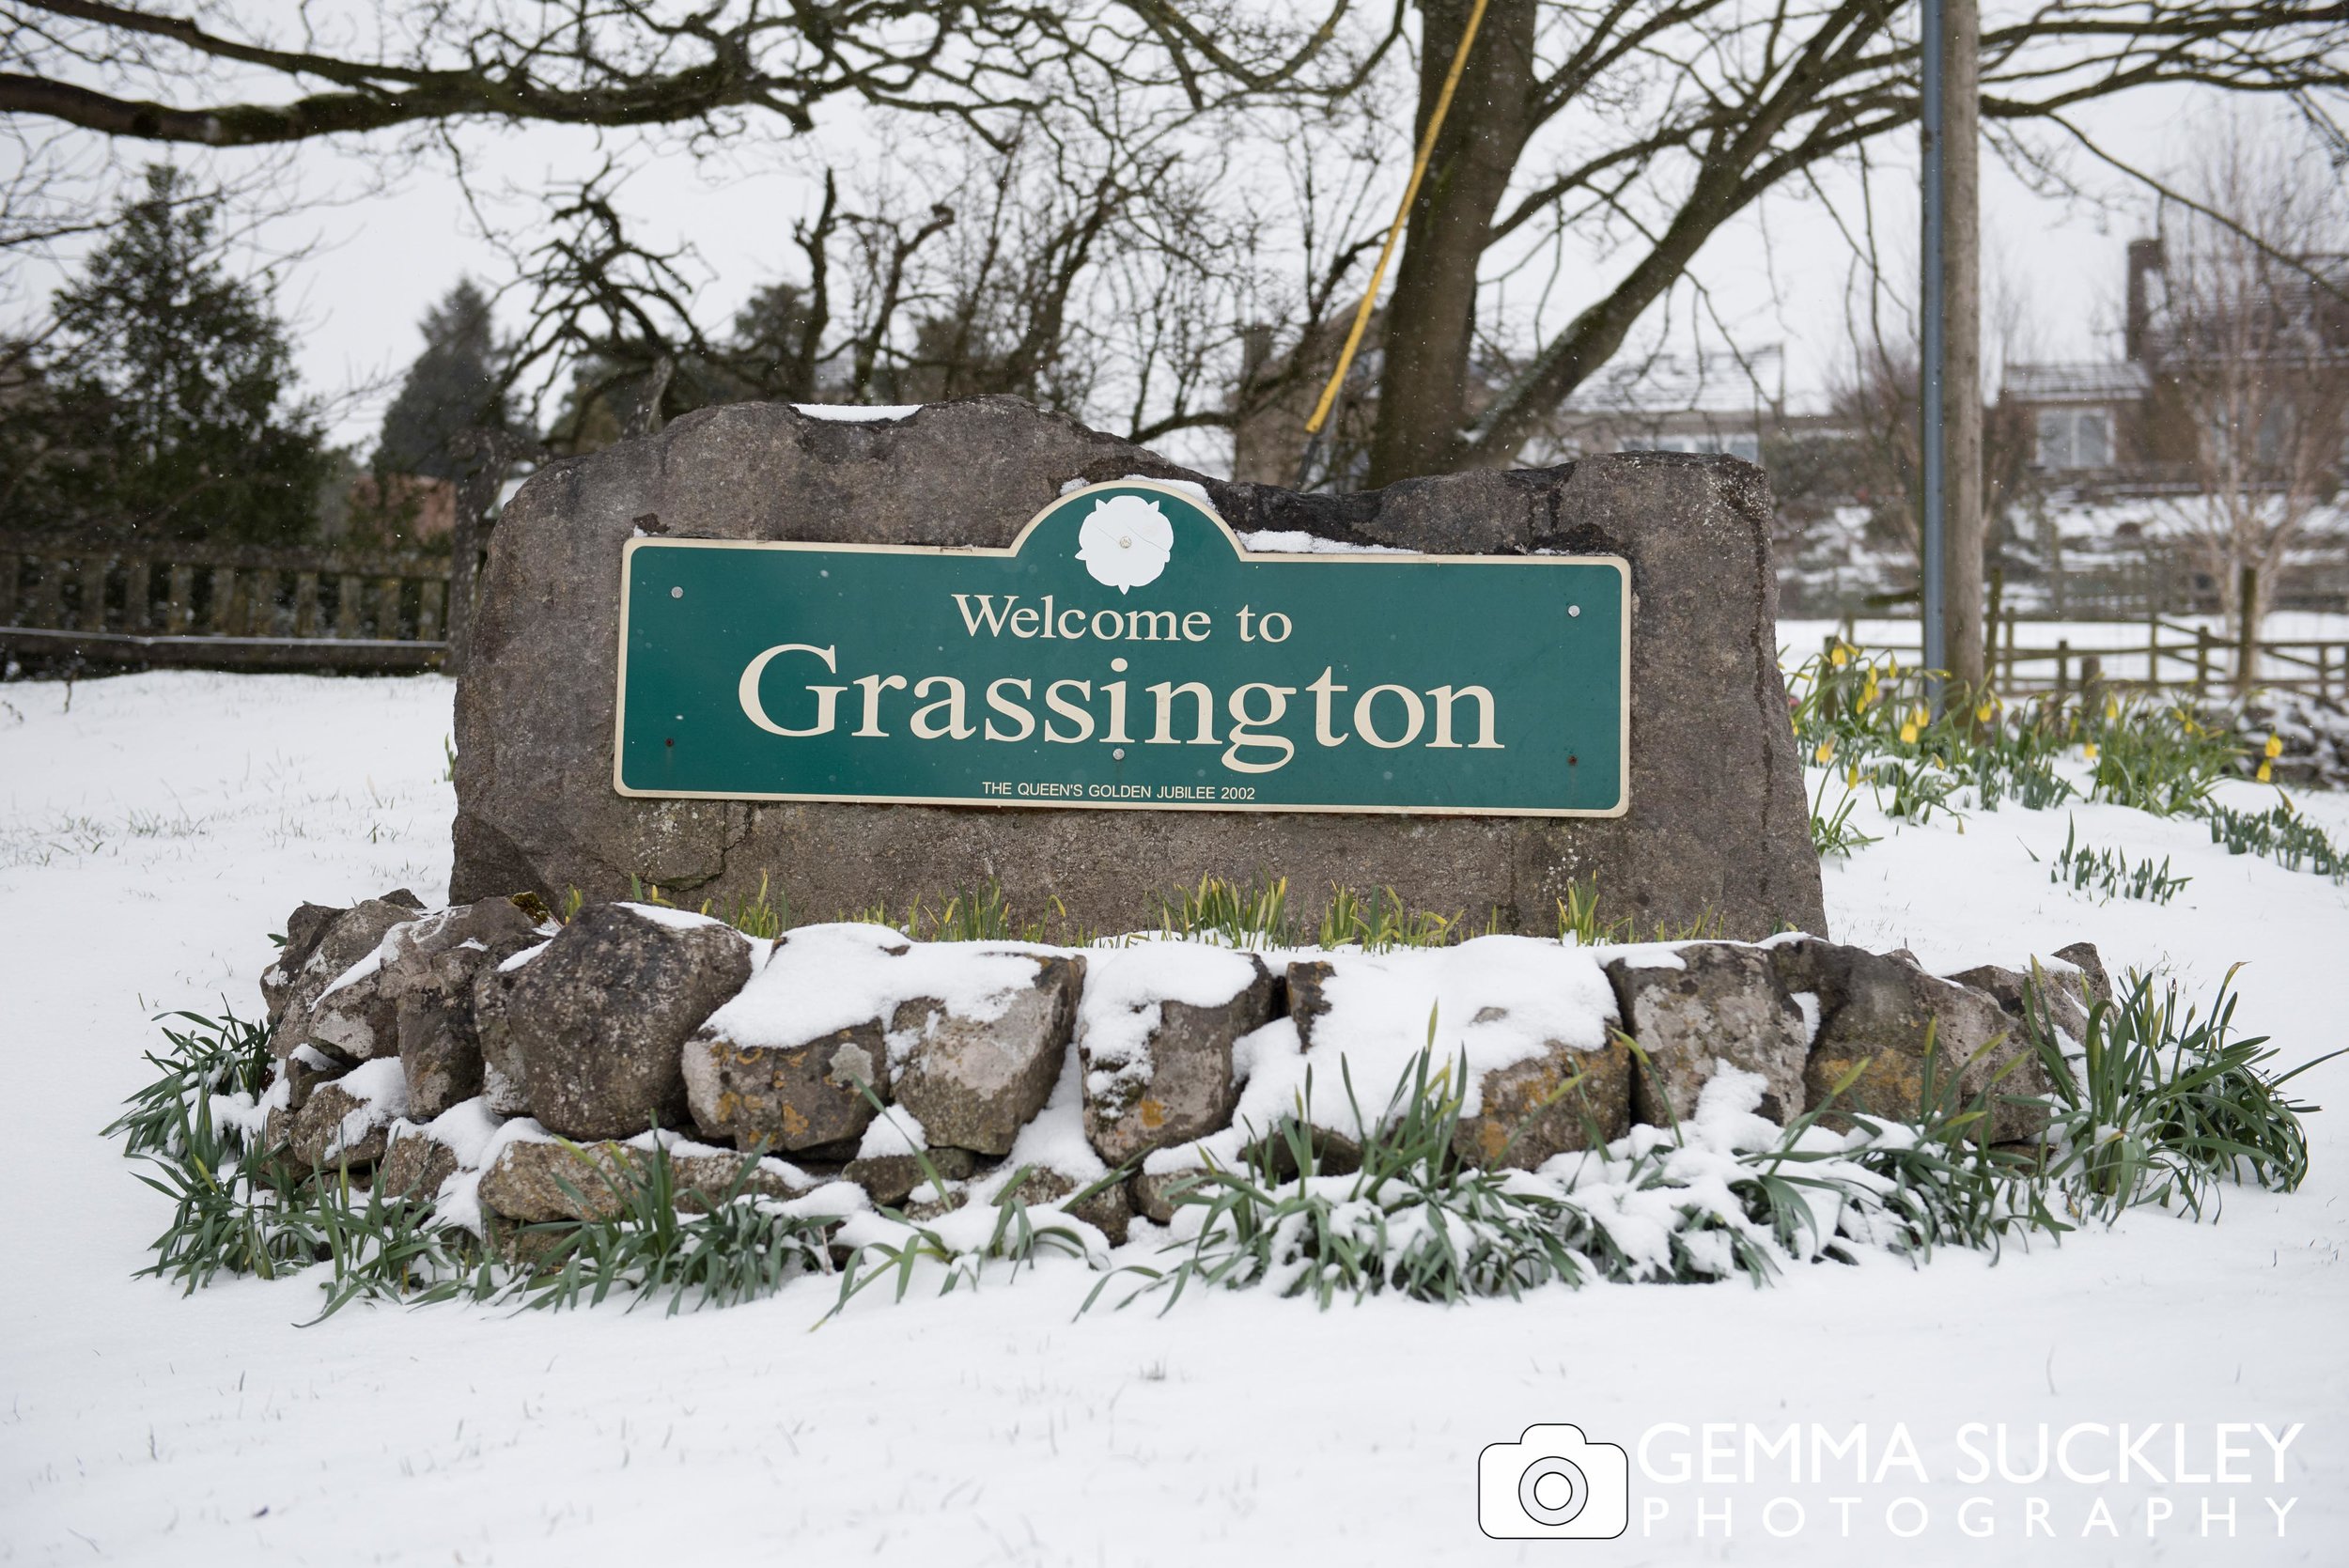 villiage sign of Grassington in north yorkshire